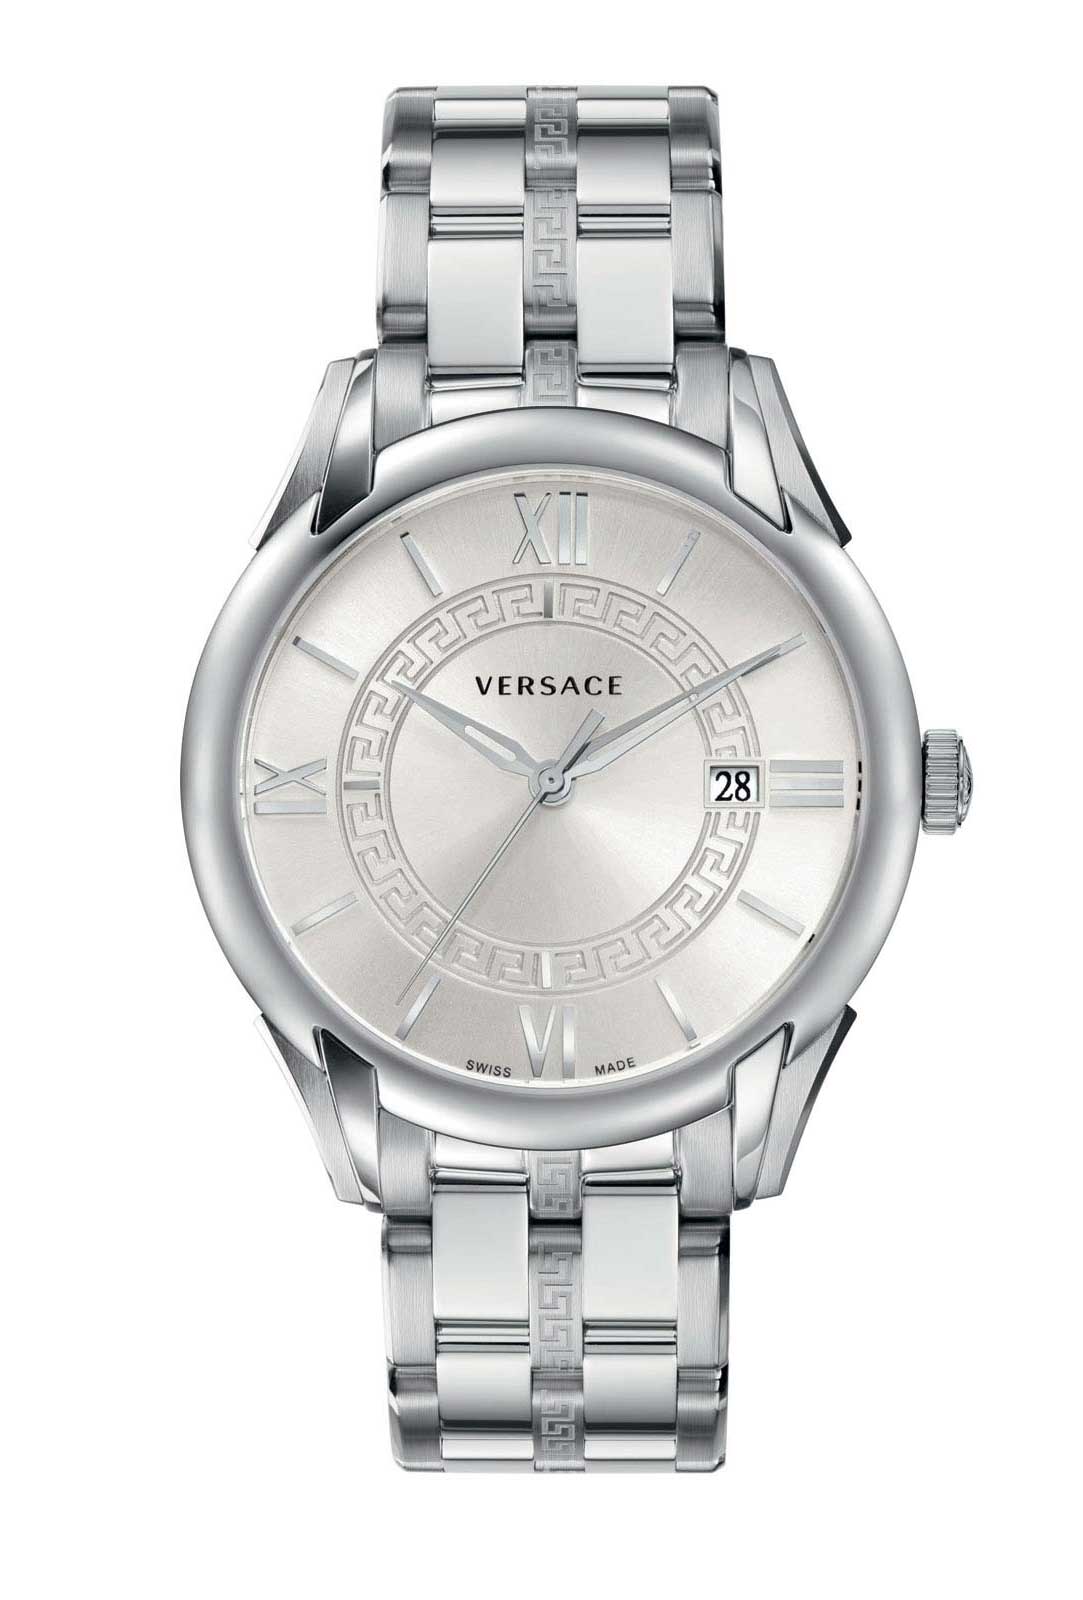 Versace QUARTZ 3 HANDS watch 715.2 WHITE/SILVER SUNRAY DIAL